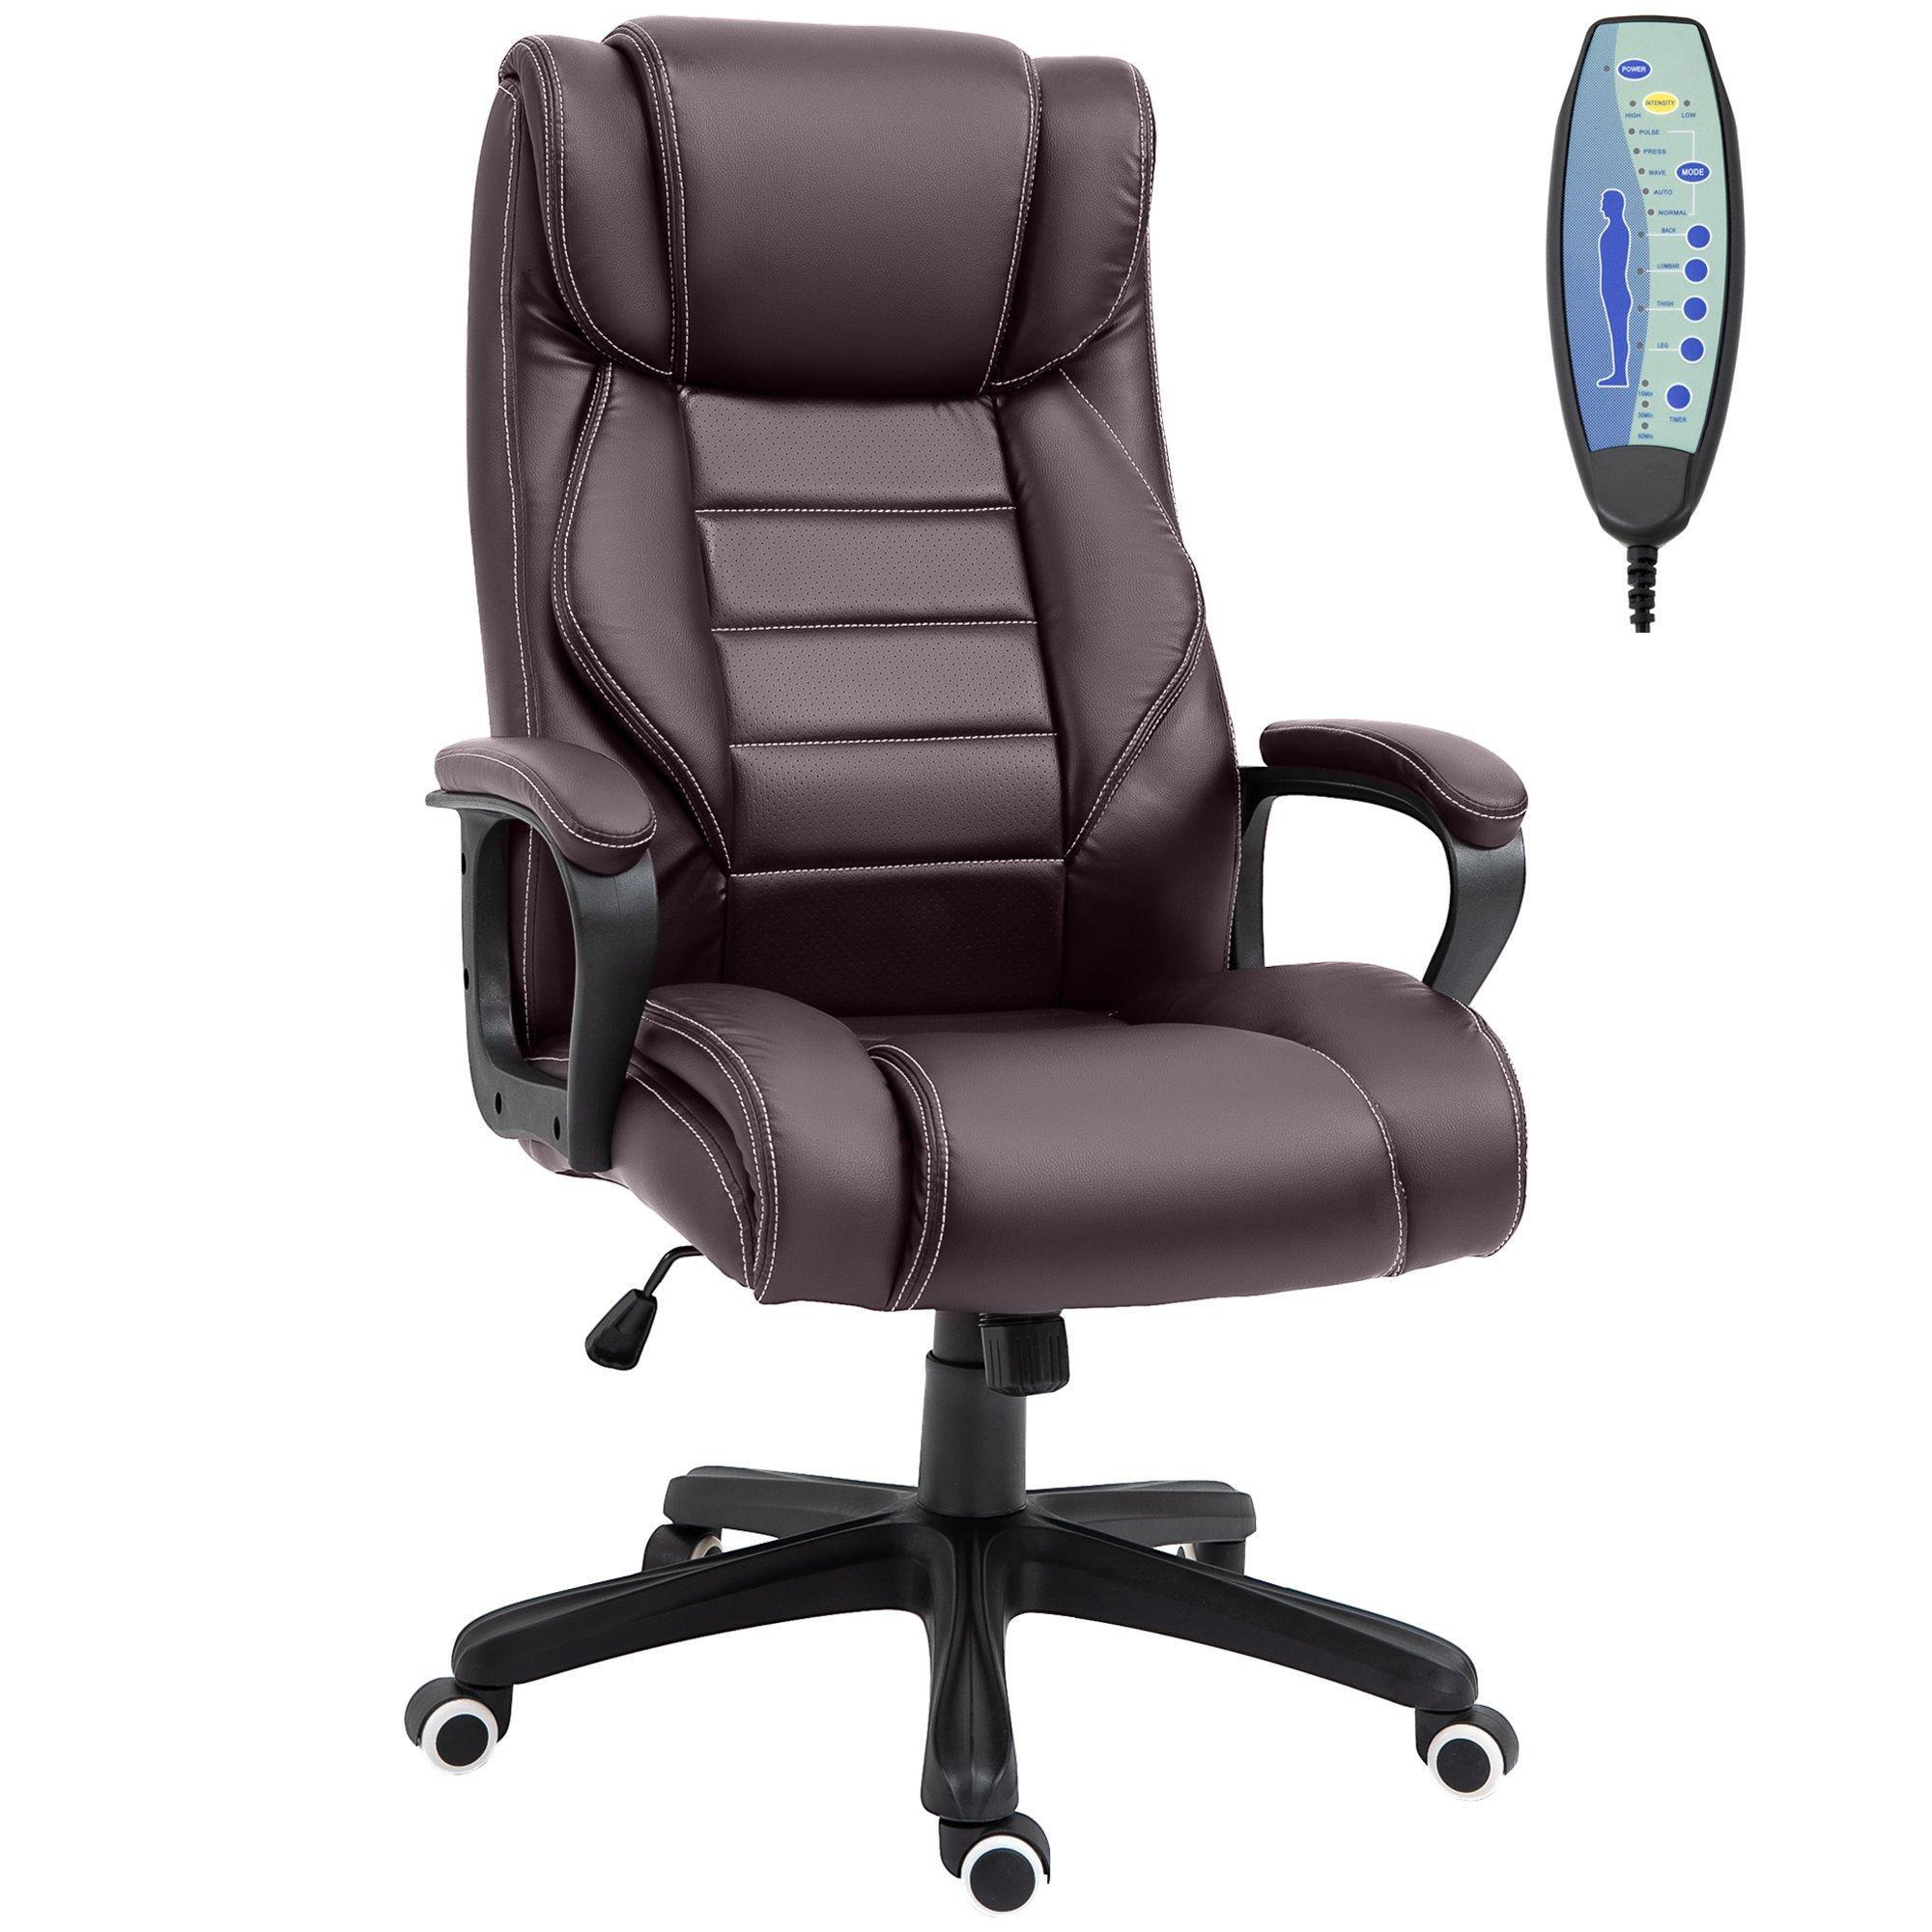 High Back 6 Points Vibration Massage Executive Ergonomic Office Chair - image 1